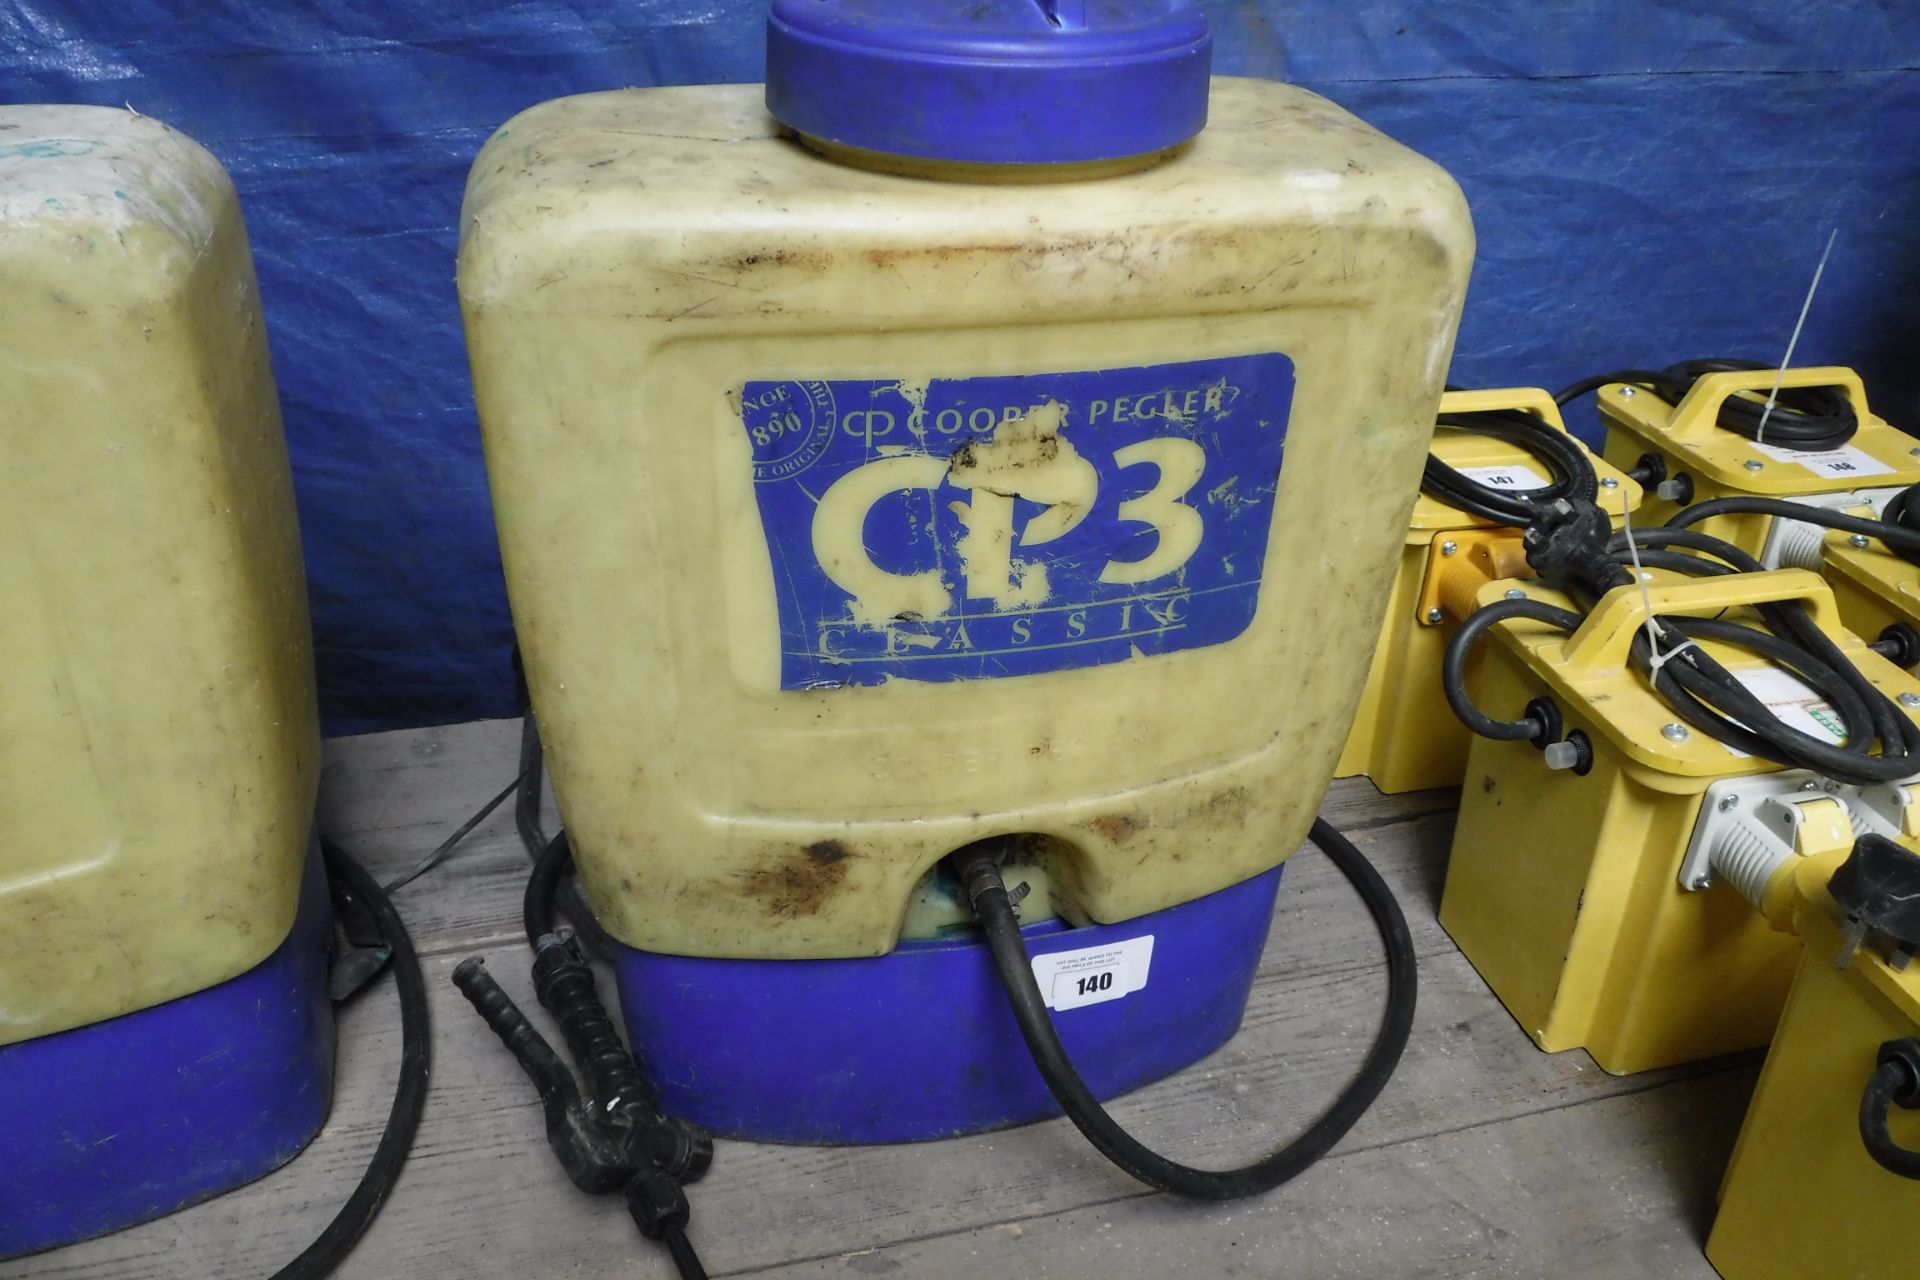 CP3 backpack sprayer